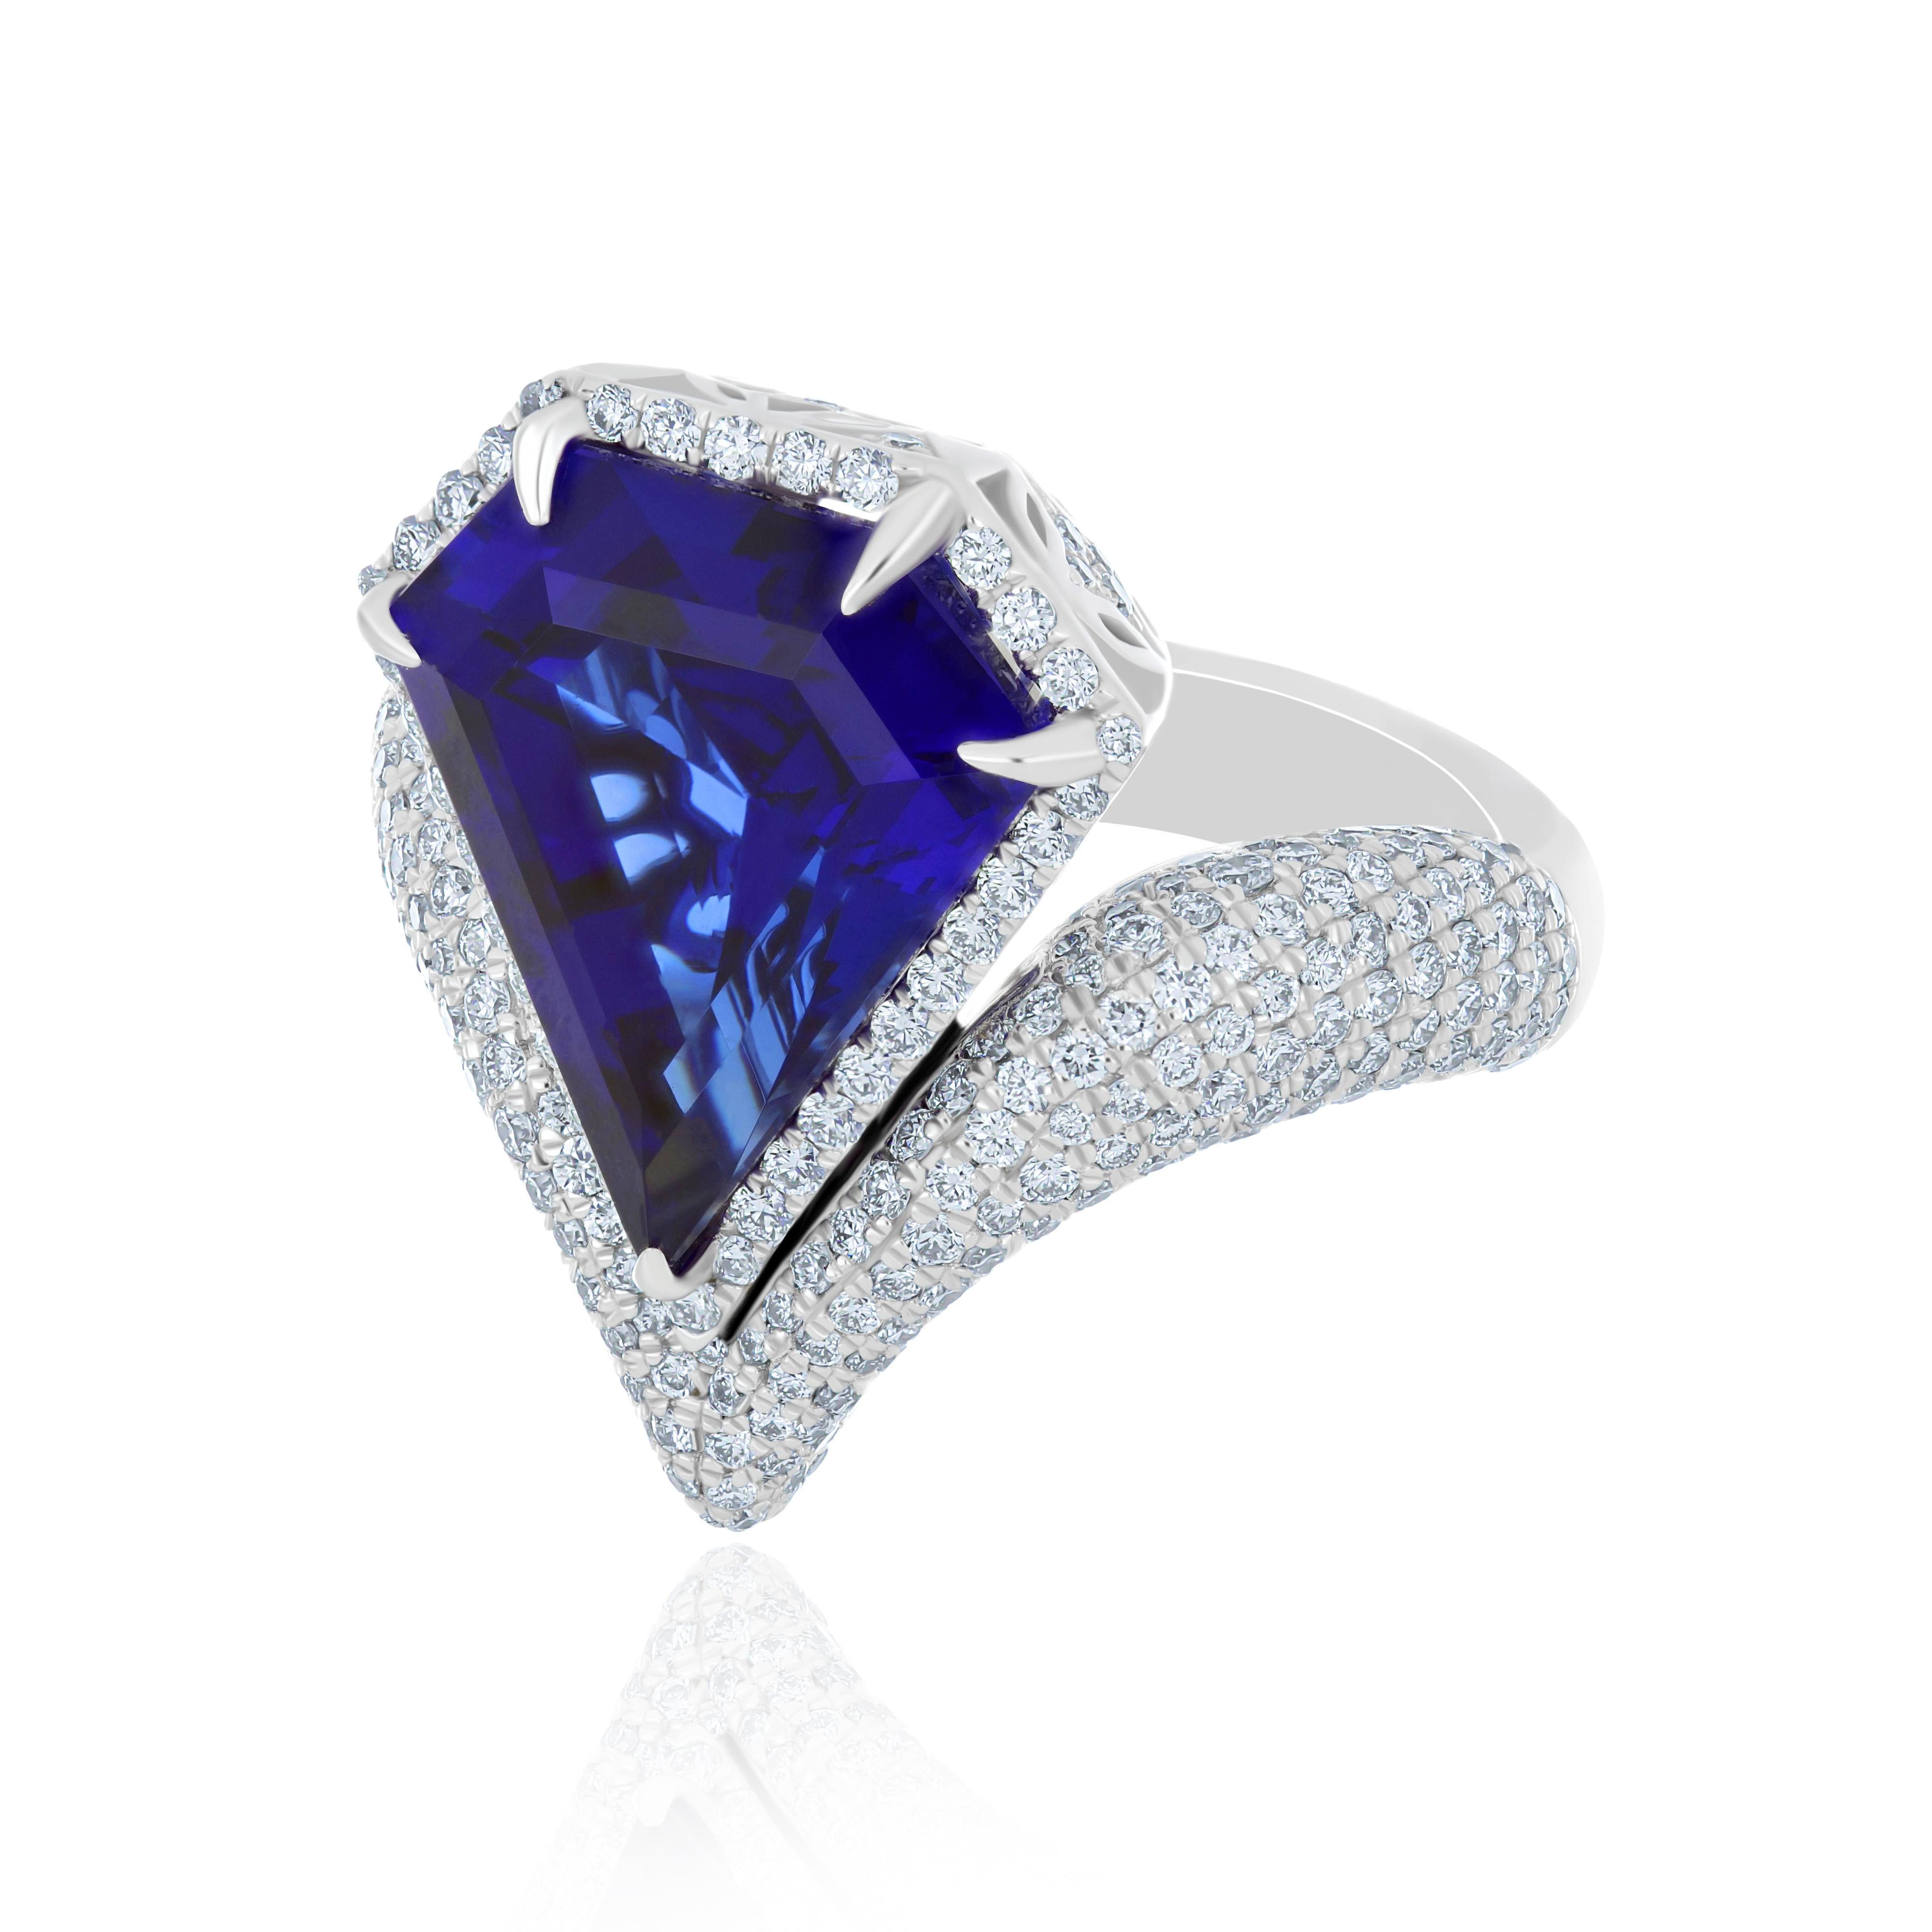 Mixed Cut 10.8 CT's Tanzanite and Diamond Ring in 18Karat White Gold Beautifull Ring  For Sale